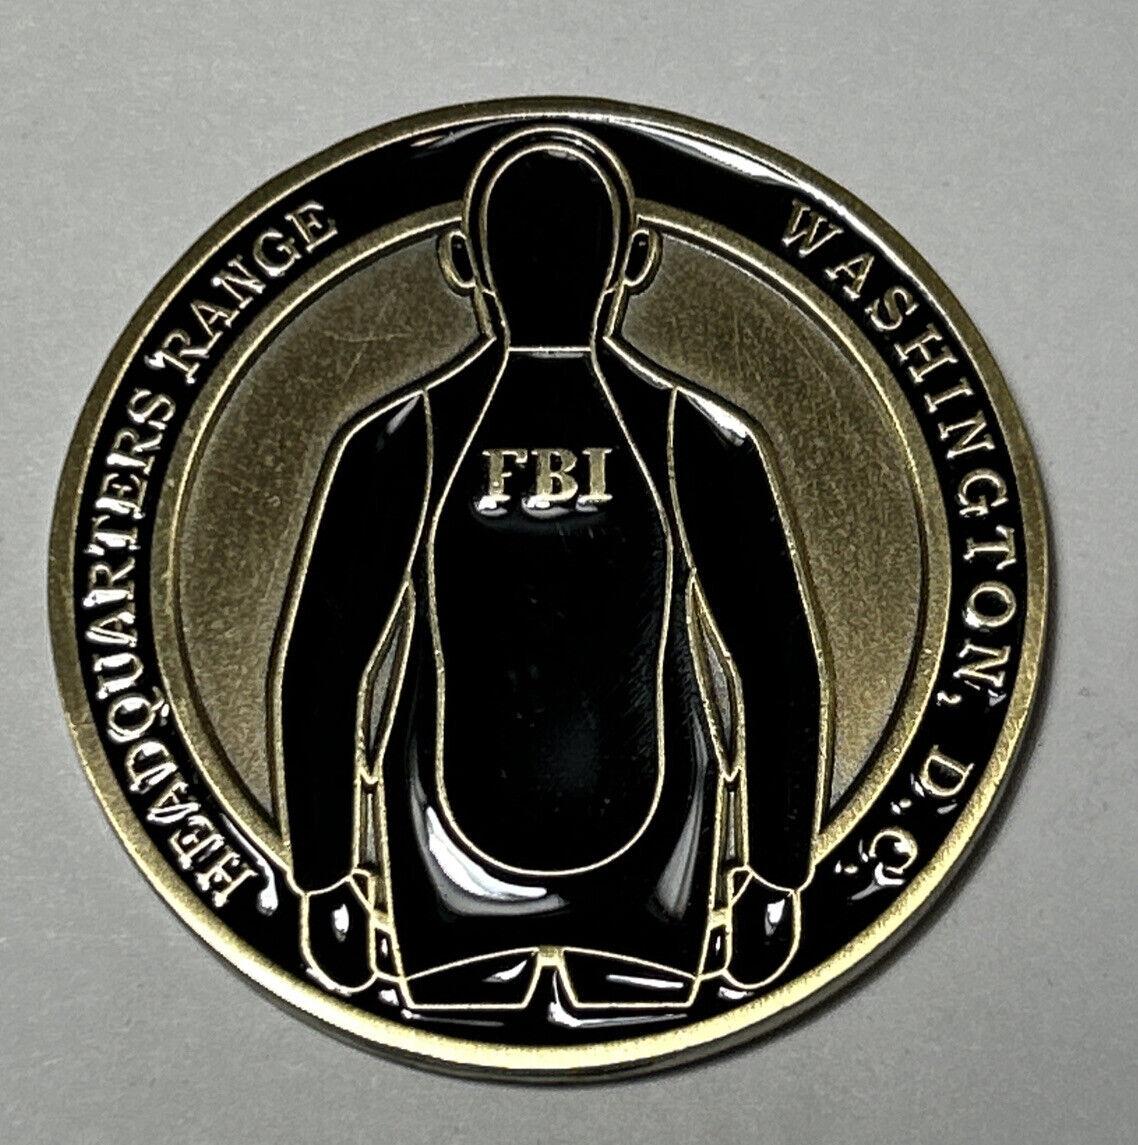 FBI Washington D.C. Headquarters Range challenge coin